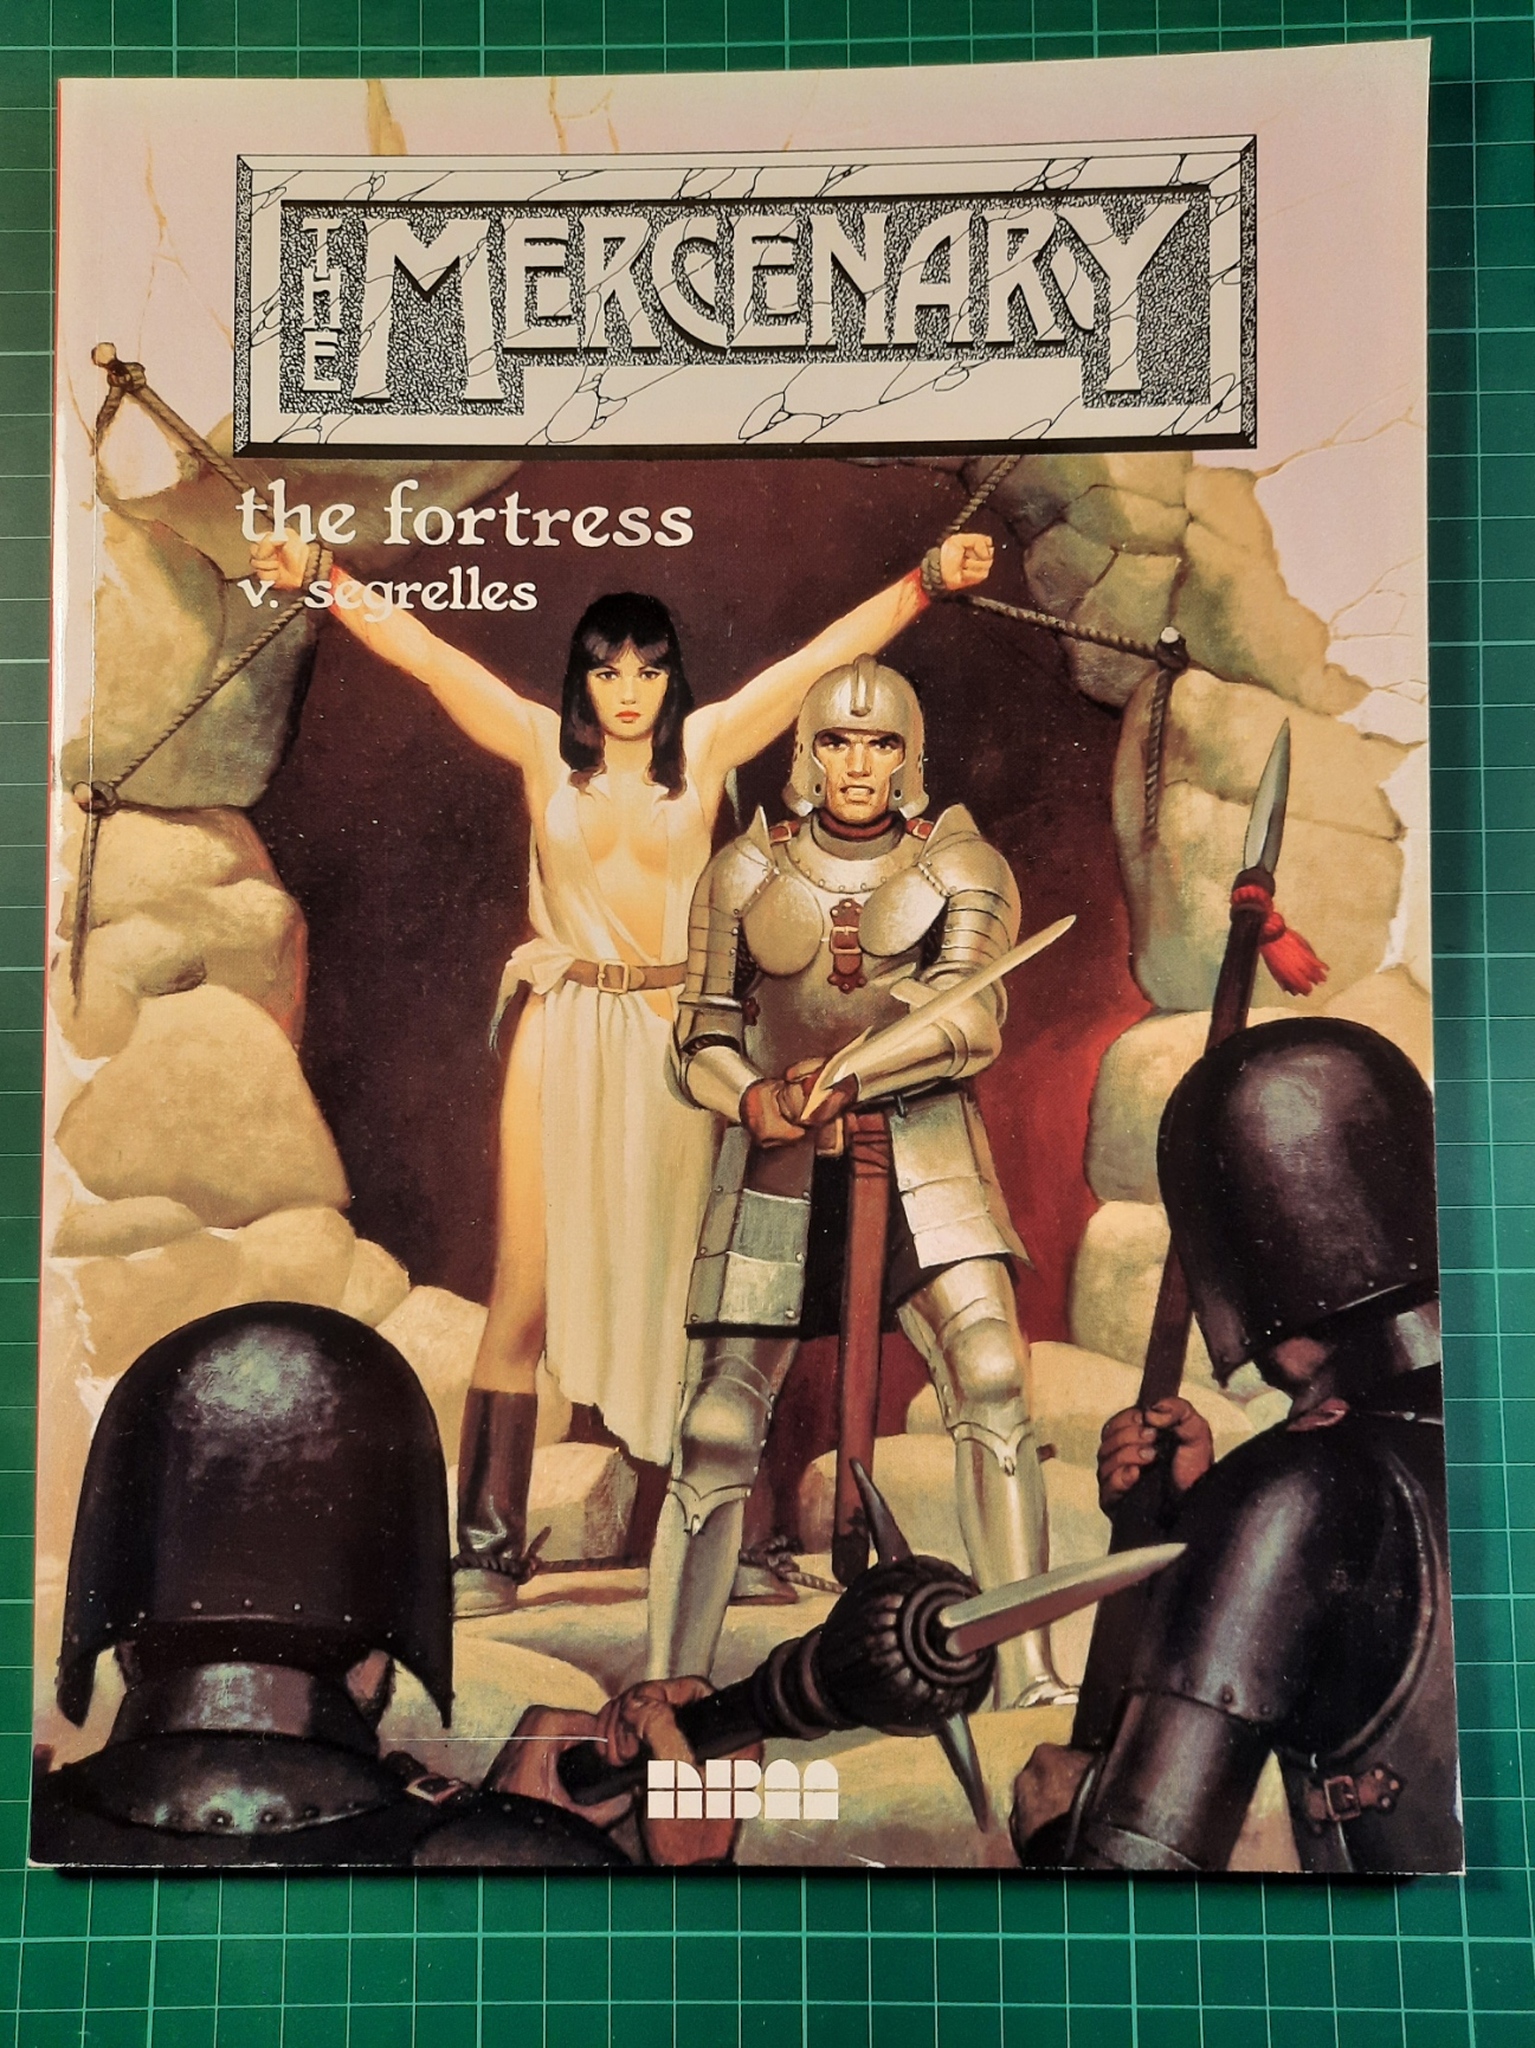 The Mercenary #3 The fortress (USA)